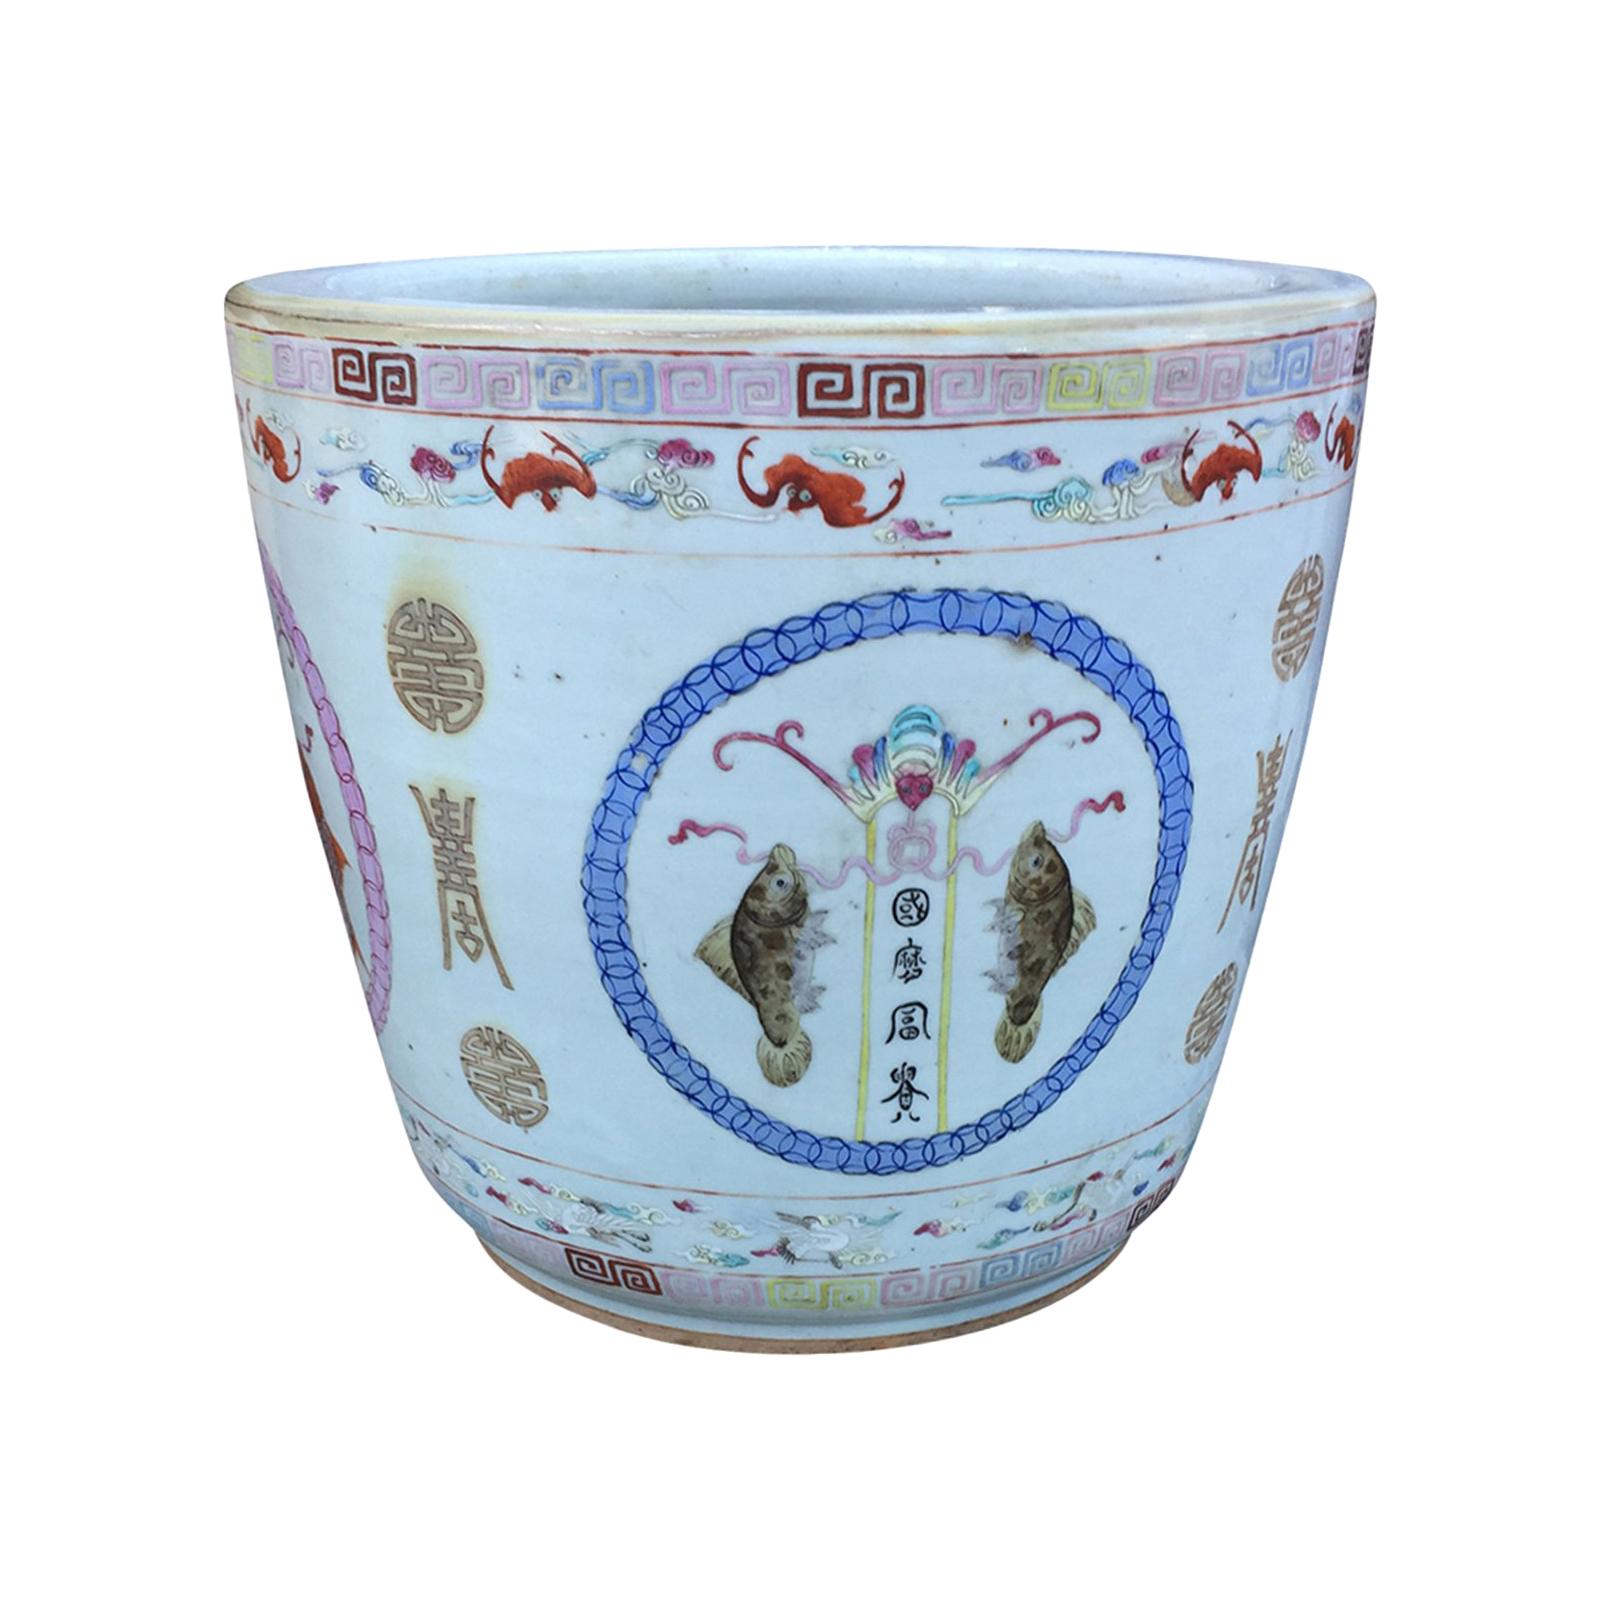 Large Chinese Porcelain Cachepot Planter, circa 1900